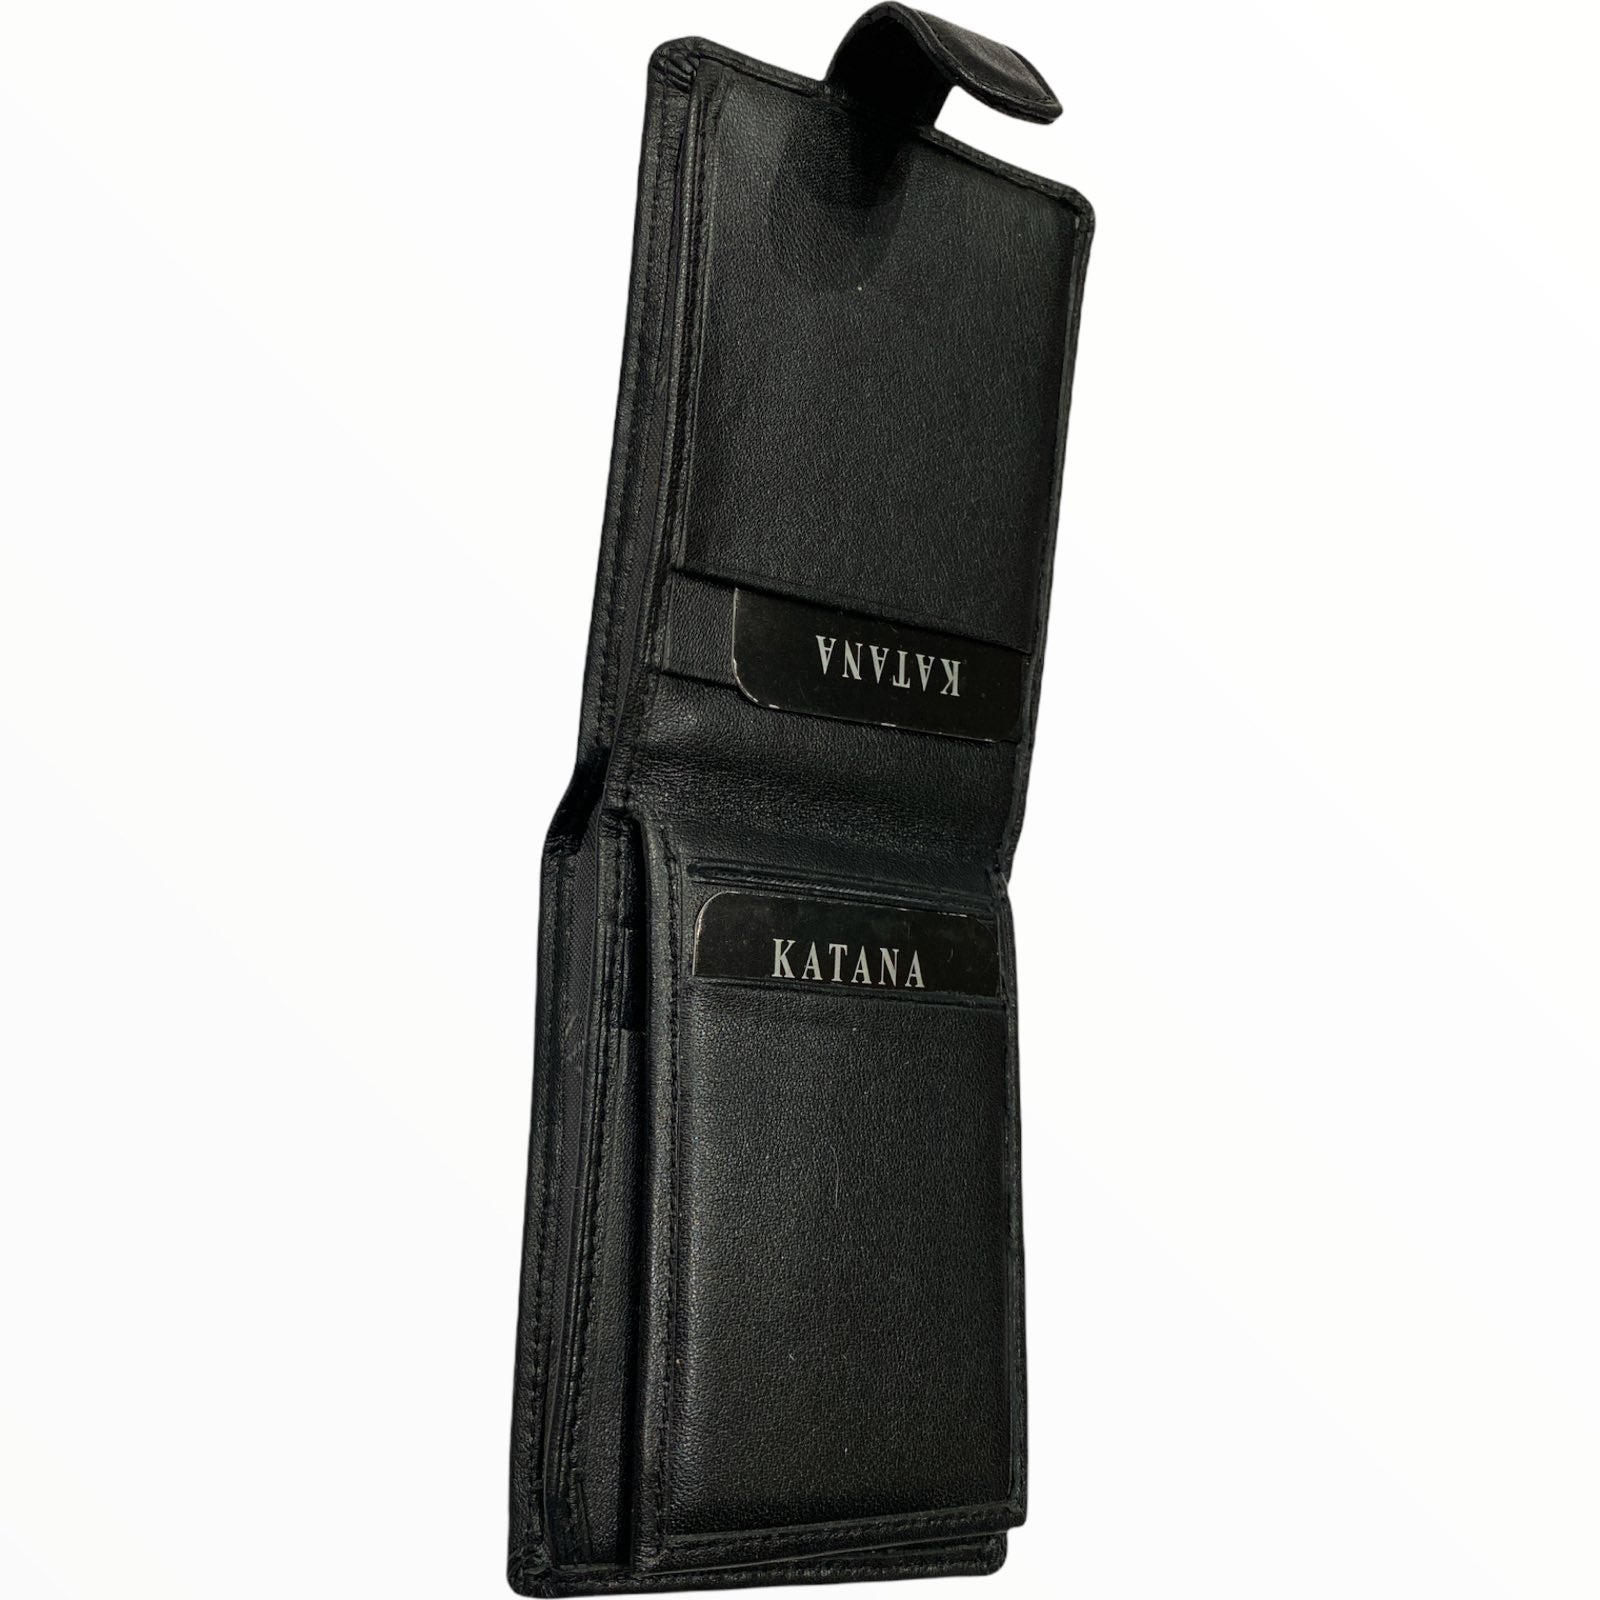 Black leather unisex wallet